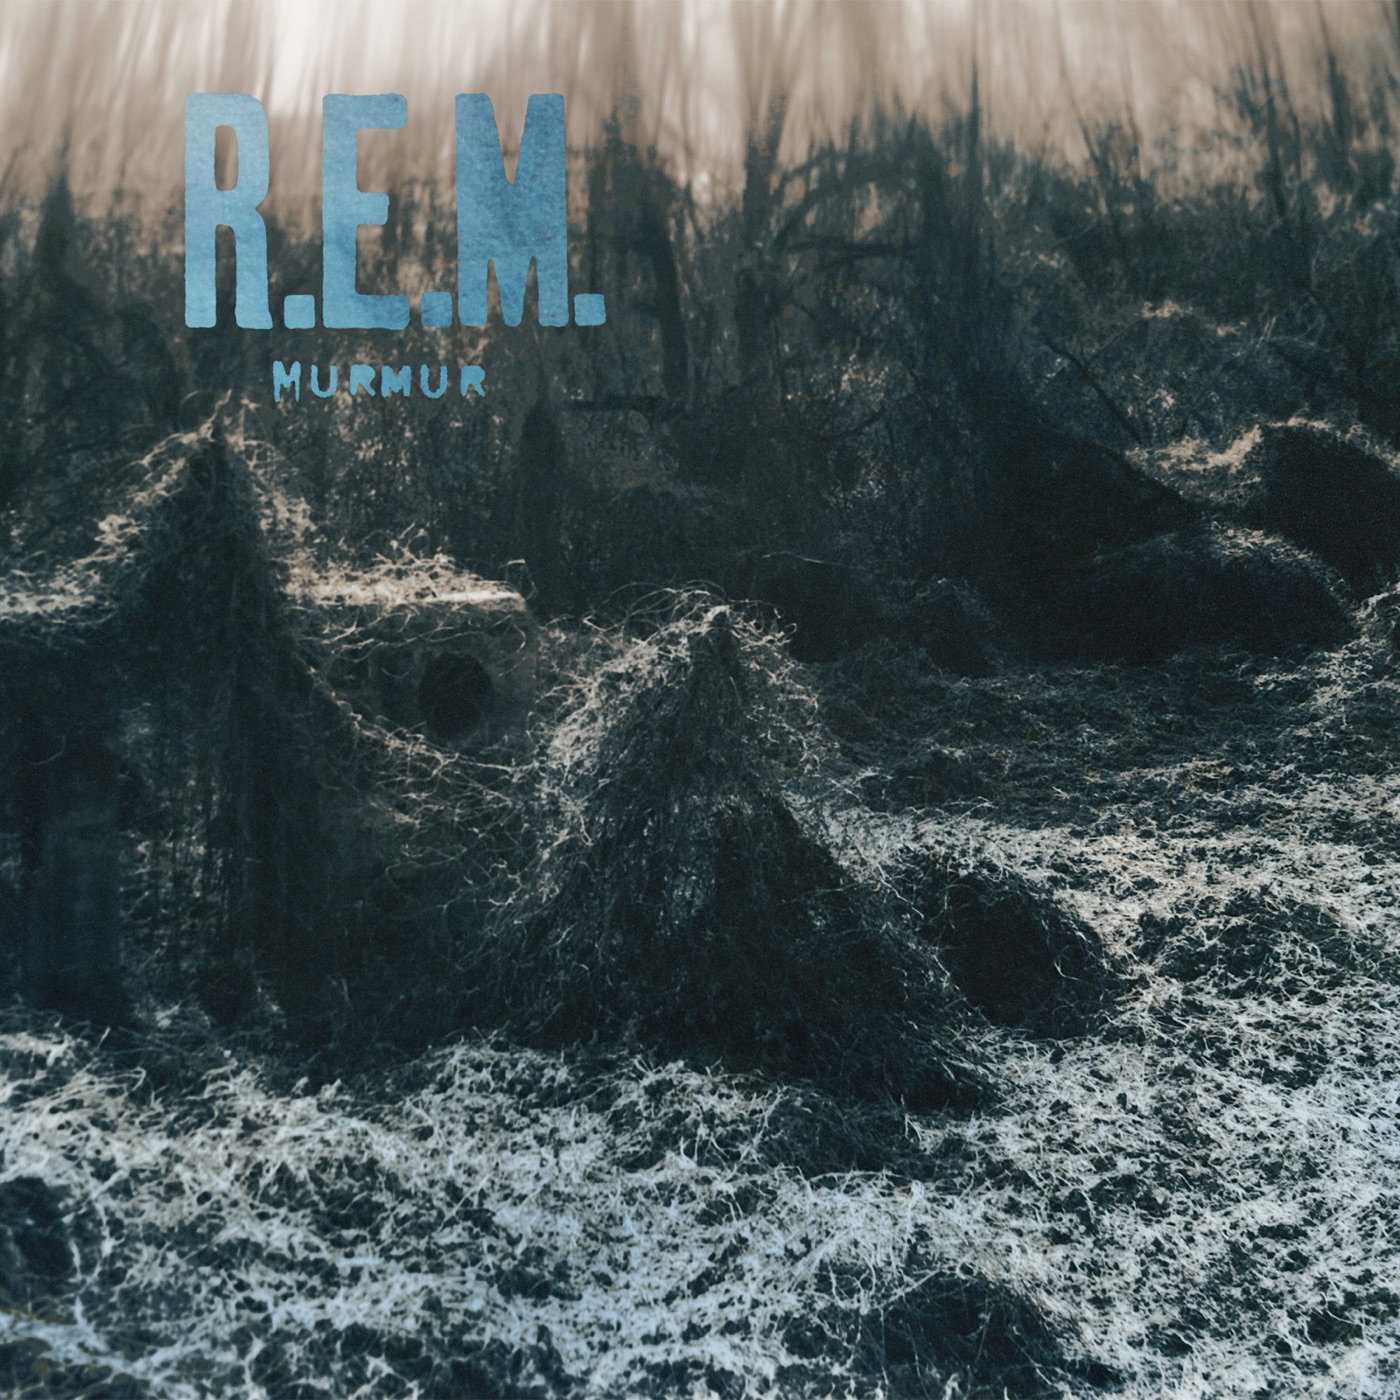 Murmur by R.E.M.